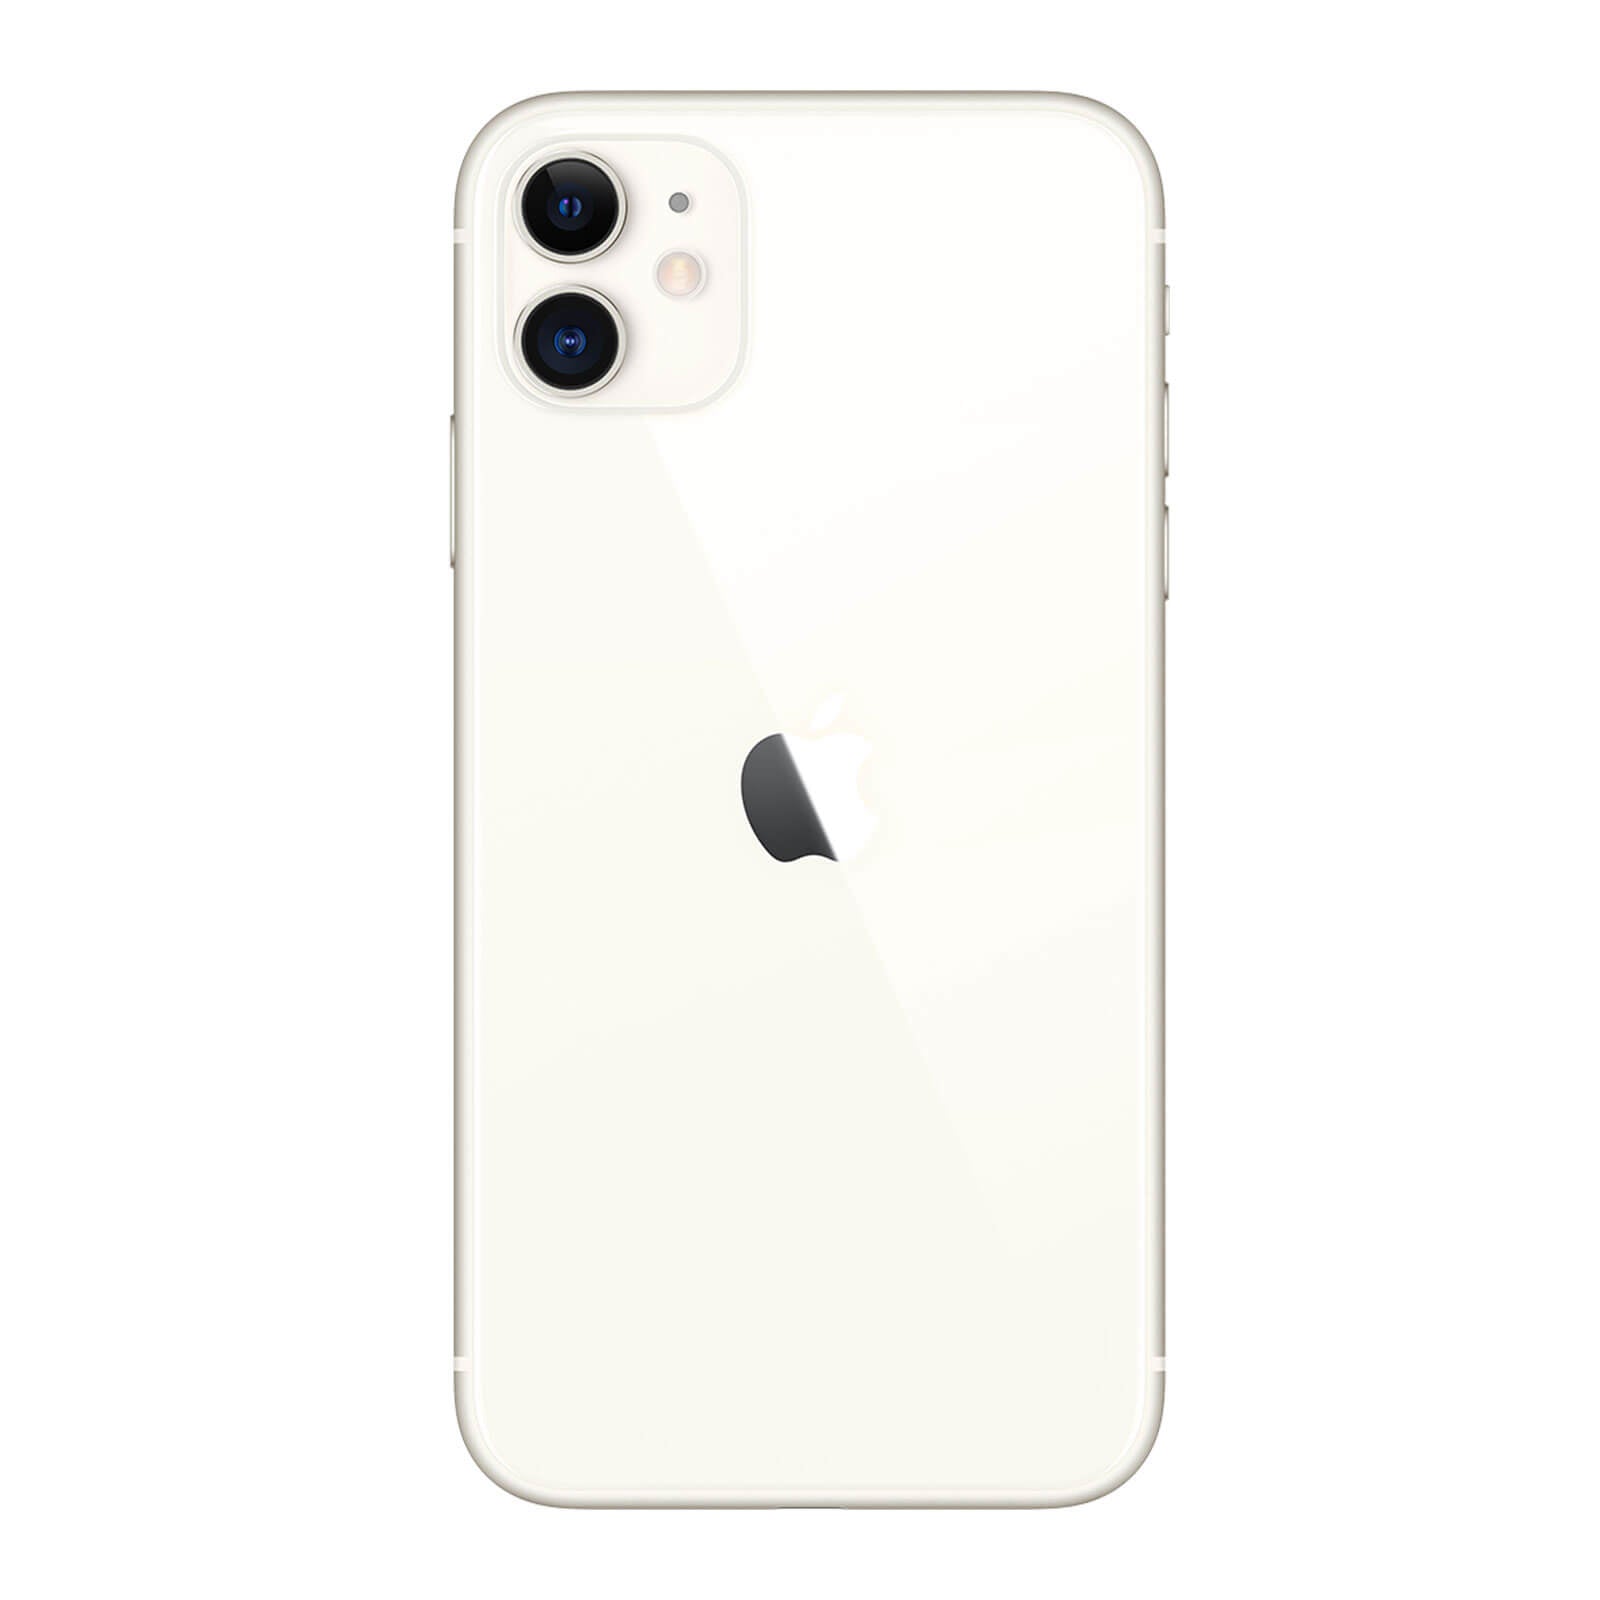 Apple iPhone 11 64GB White Pristine - AT&T